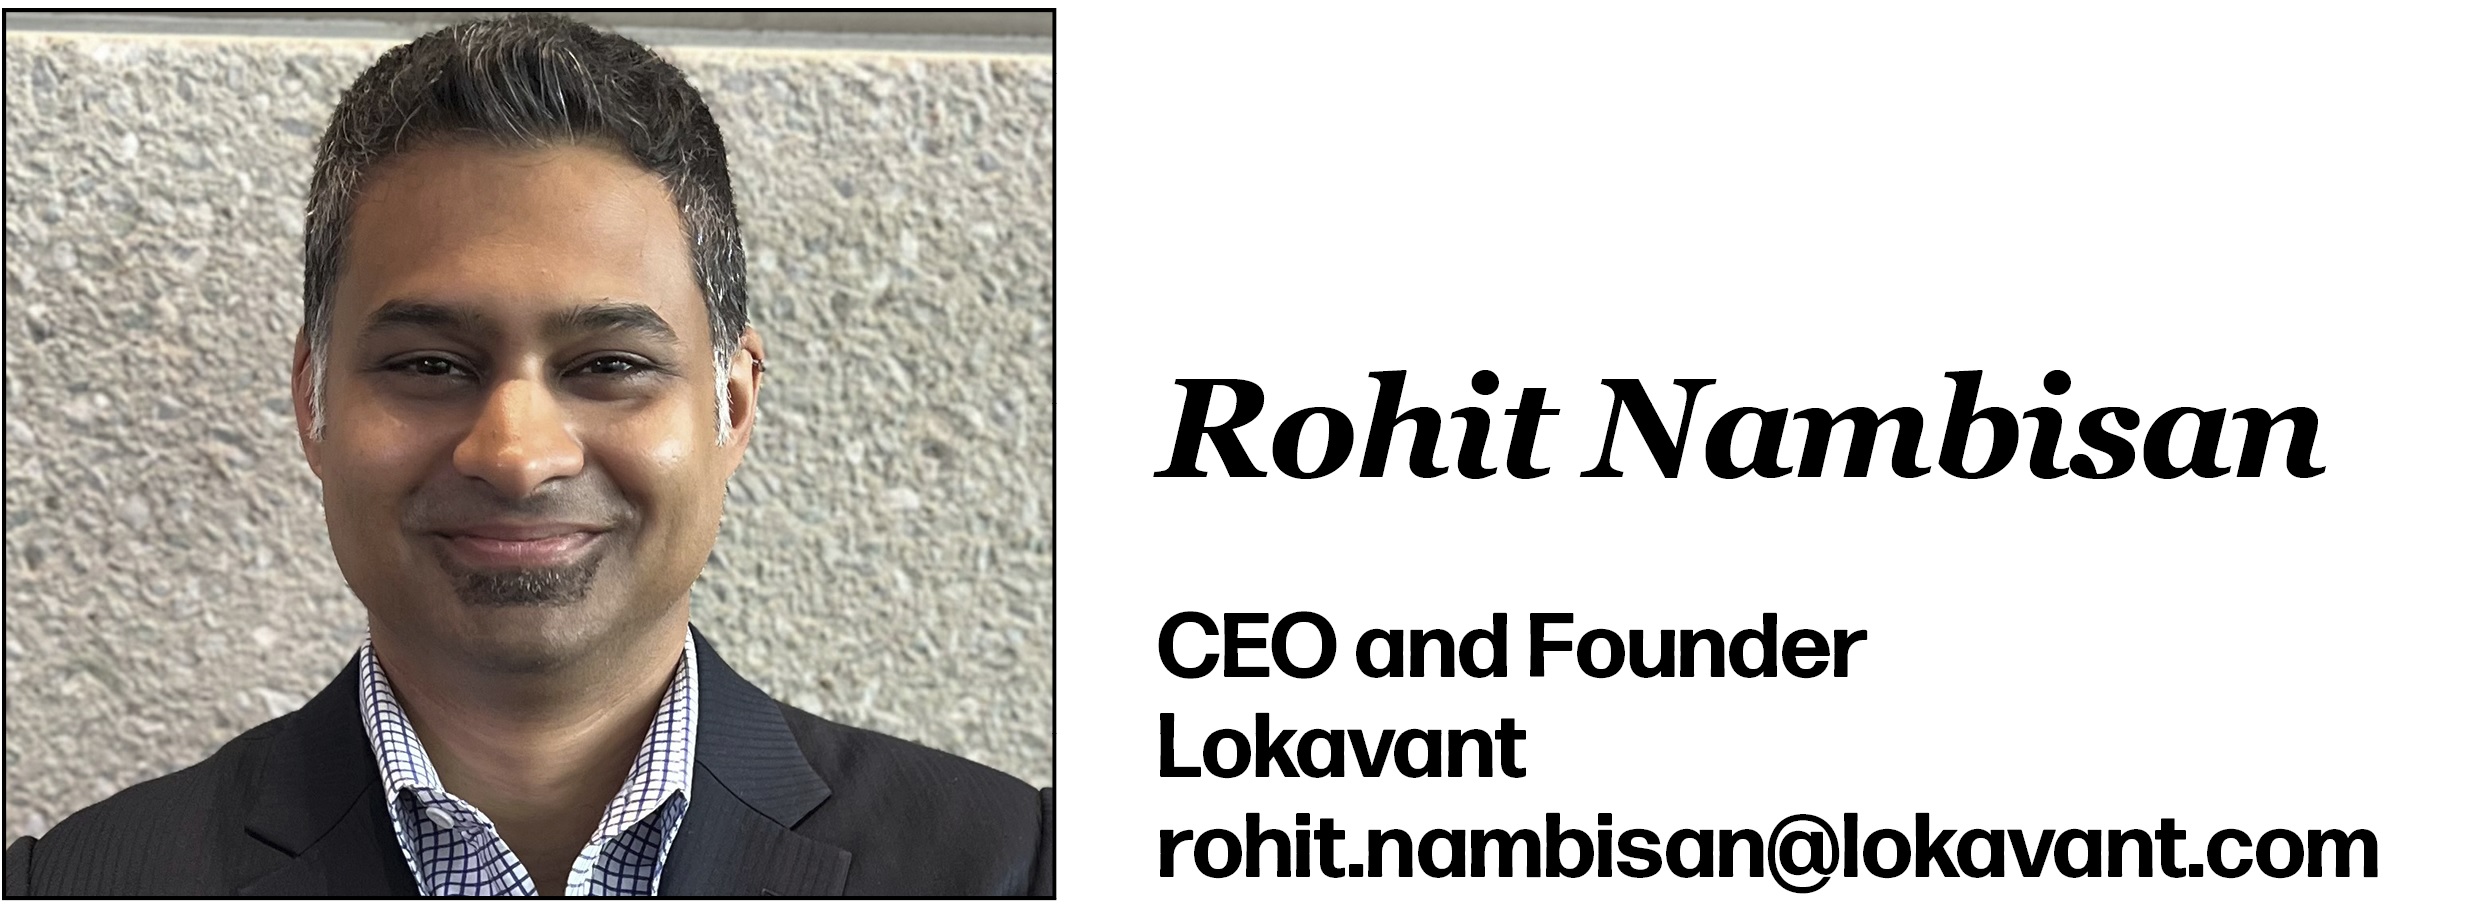 Rohit Nambisan CEO and Founder Lokavant rohit.nambisan@lokavant.com